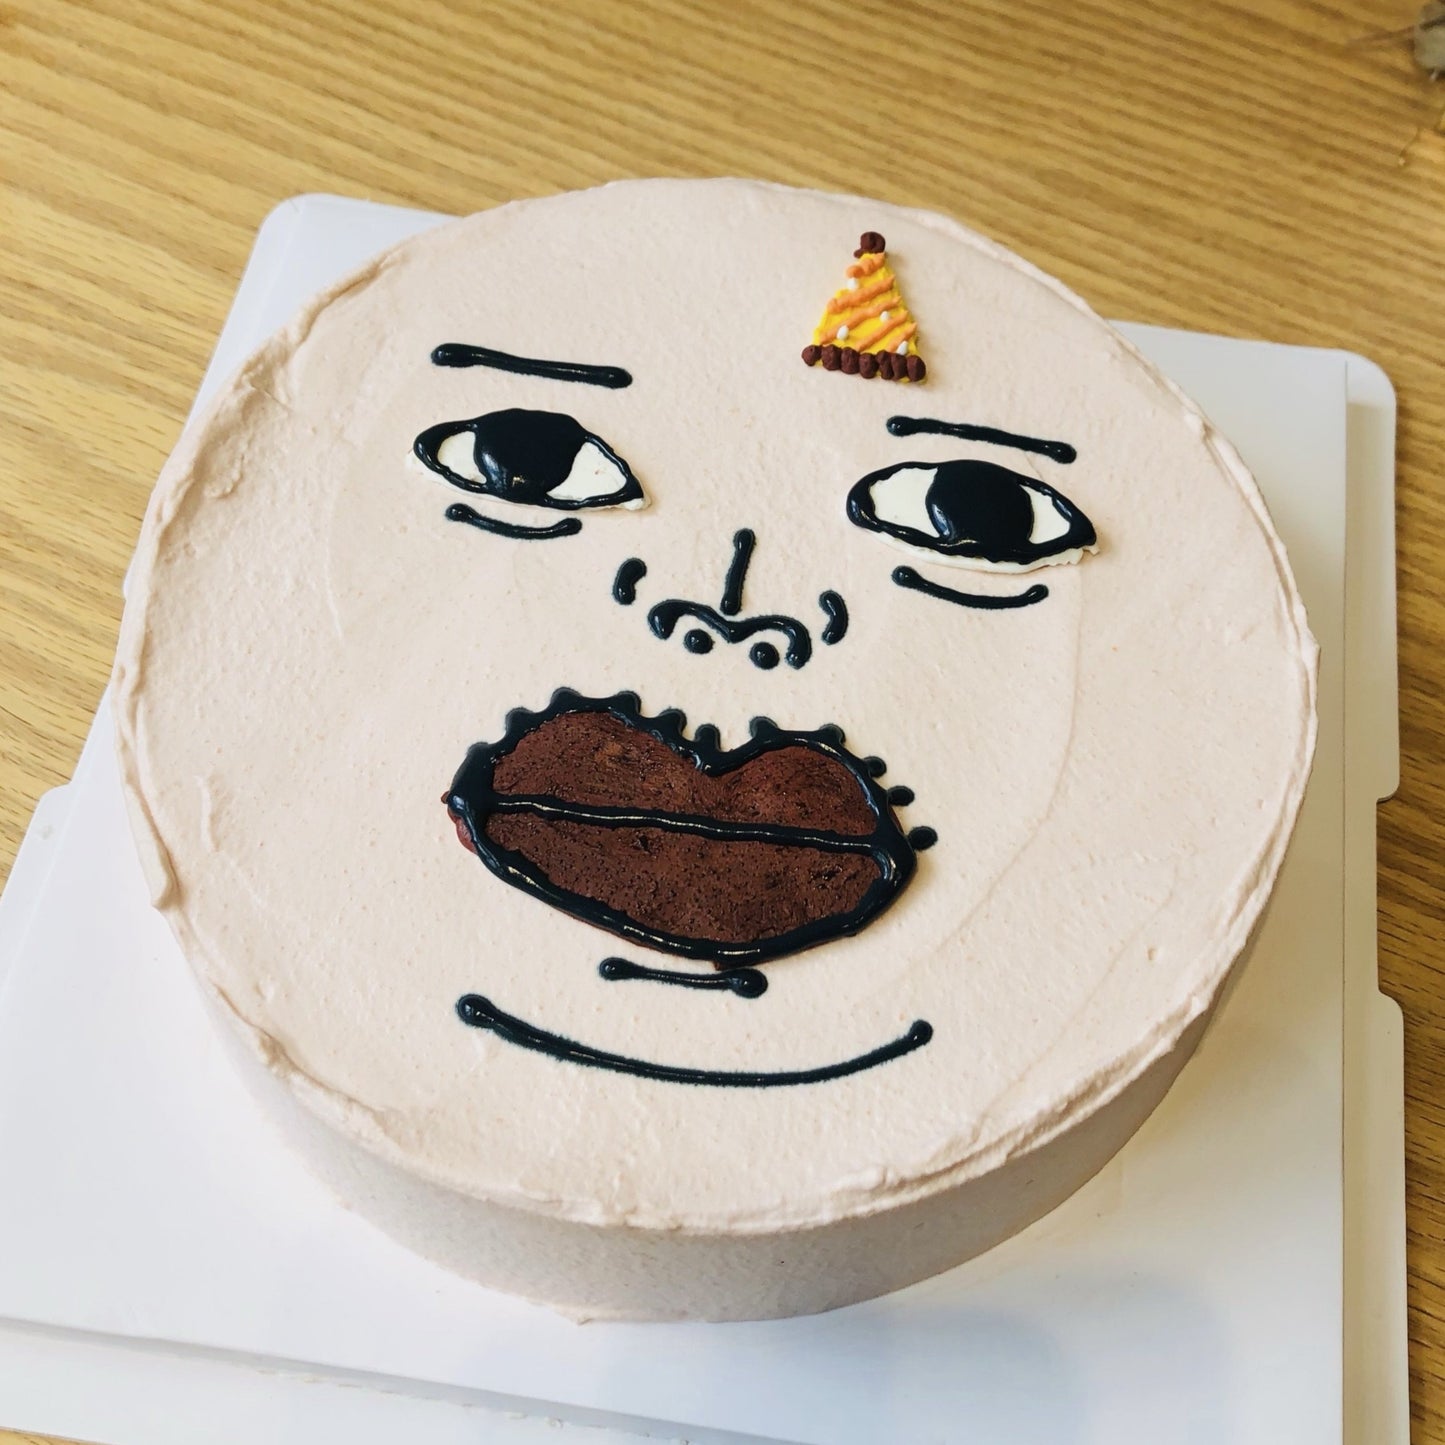 Creative Ugly Cake